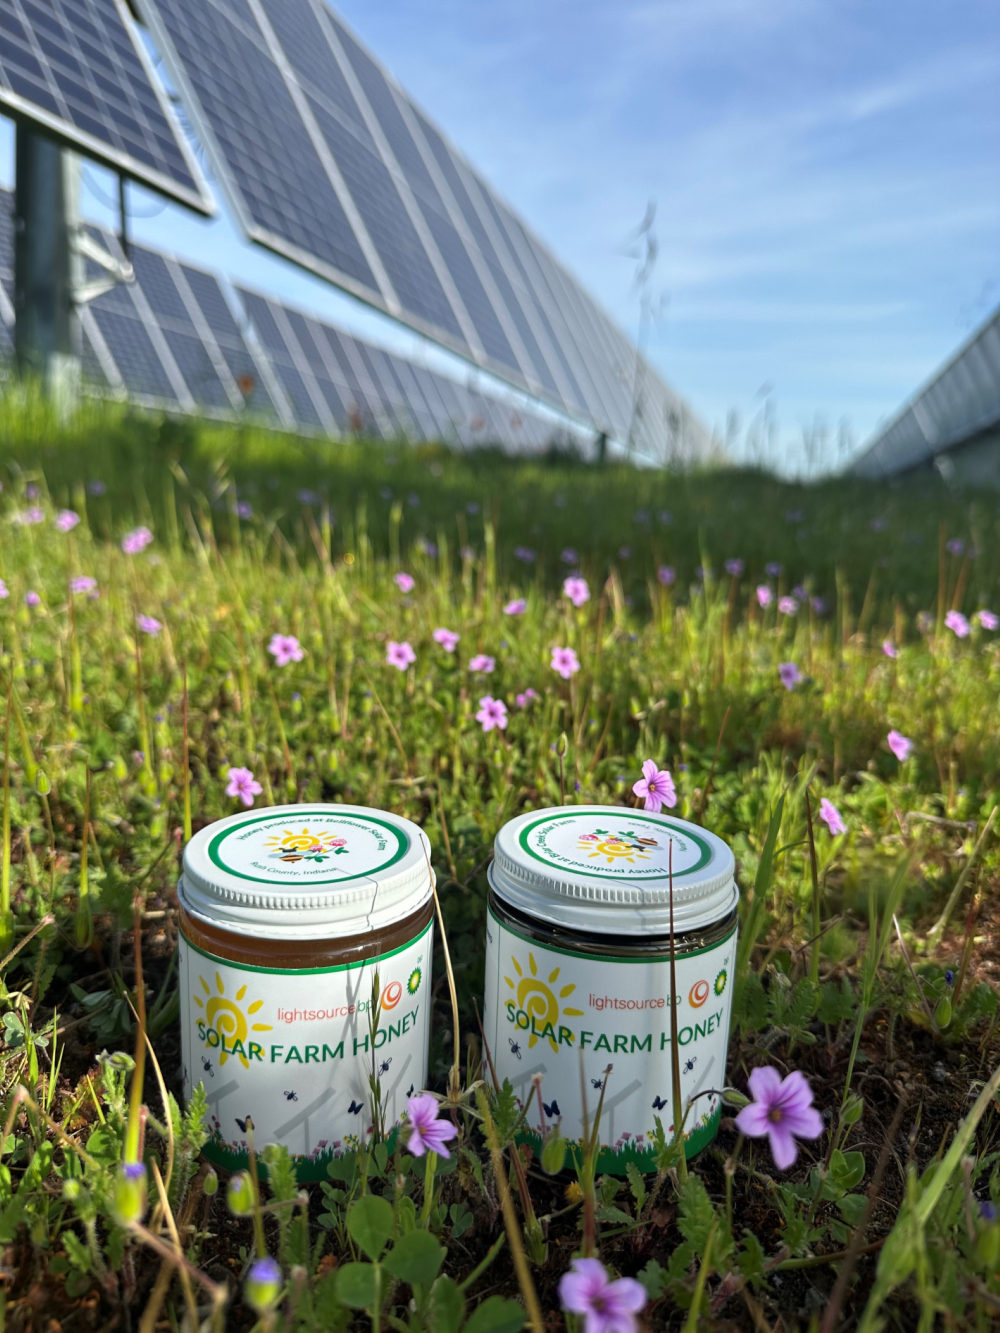 Honey jars at a solar farm